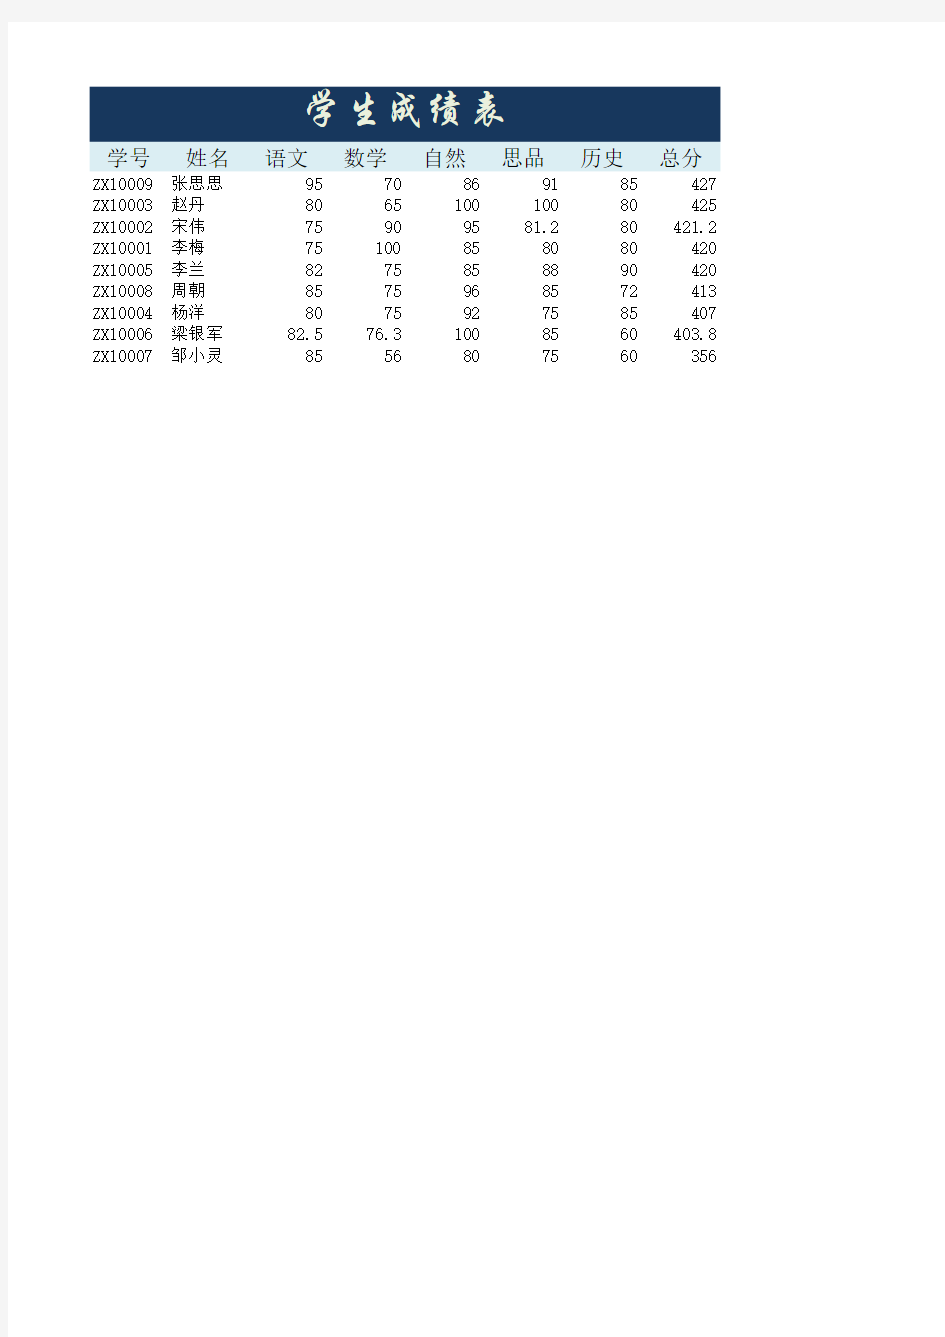 [Excel表格]期末成绩统计表